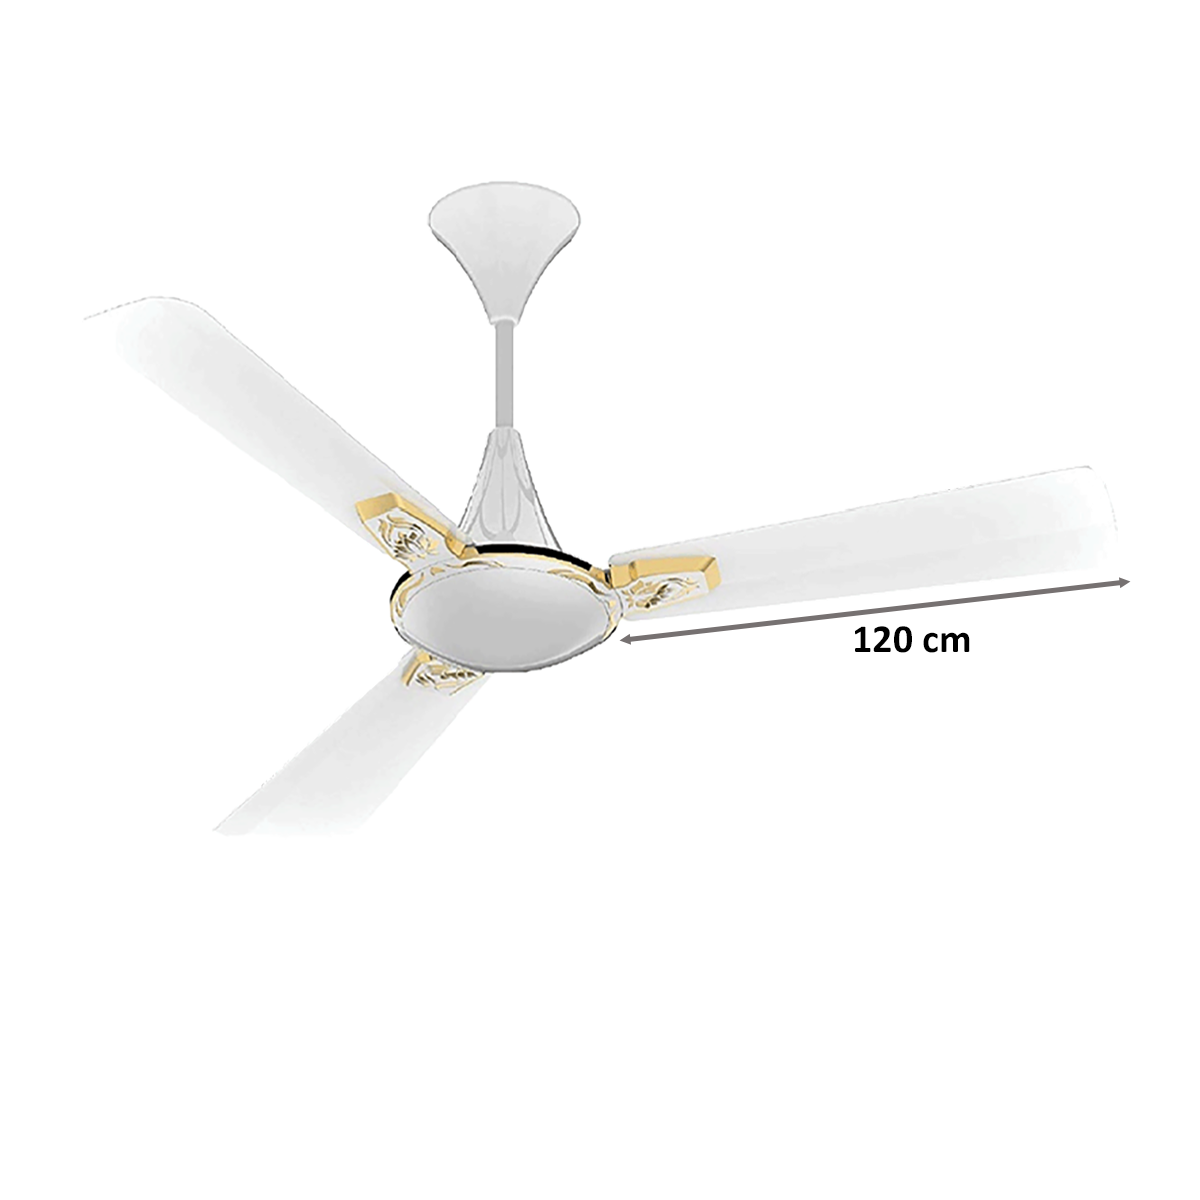 Crompton 120 cm 3 Blades Ceiling Fan (Aura2 / Lotus Pearl White Gold)_2